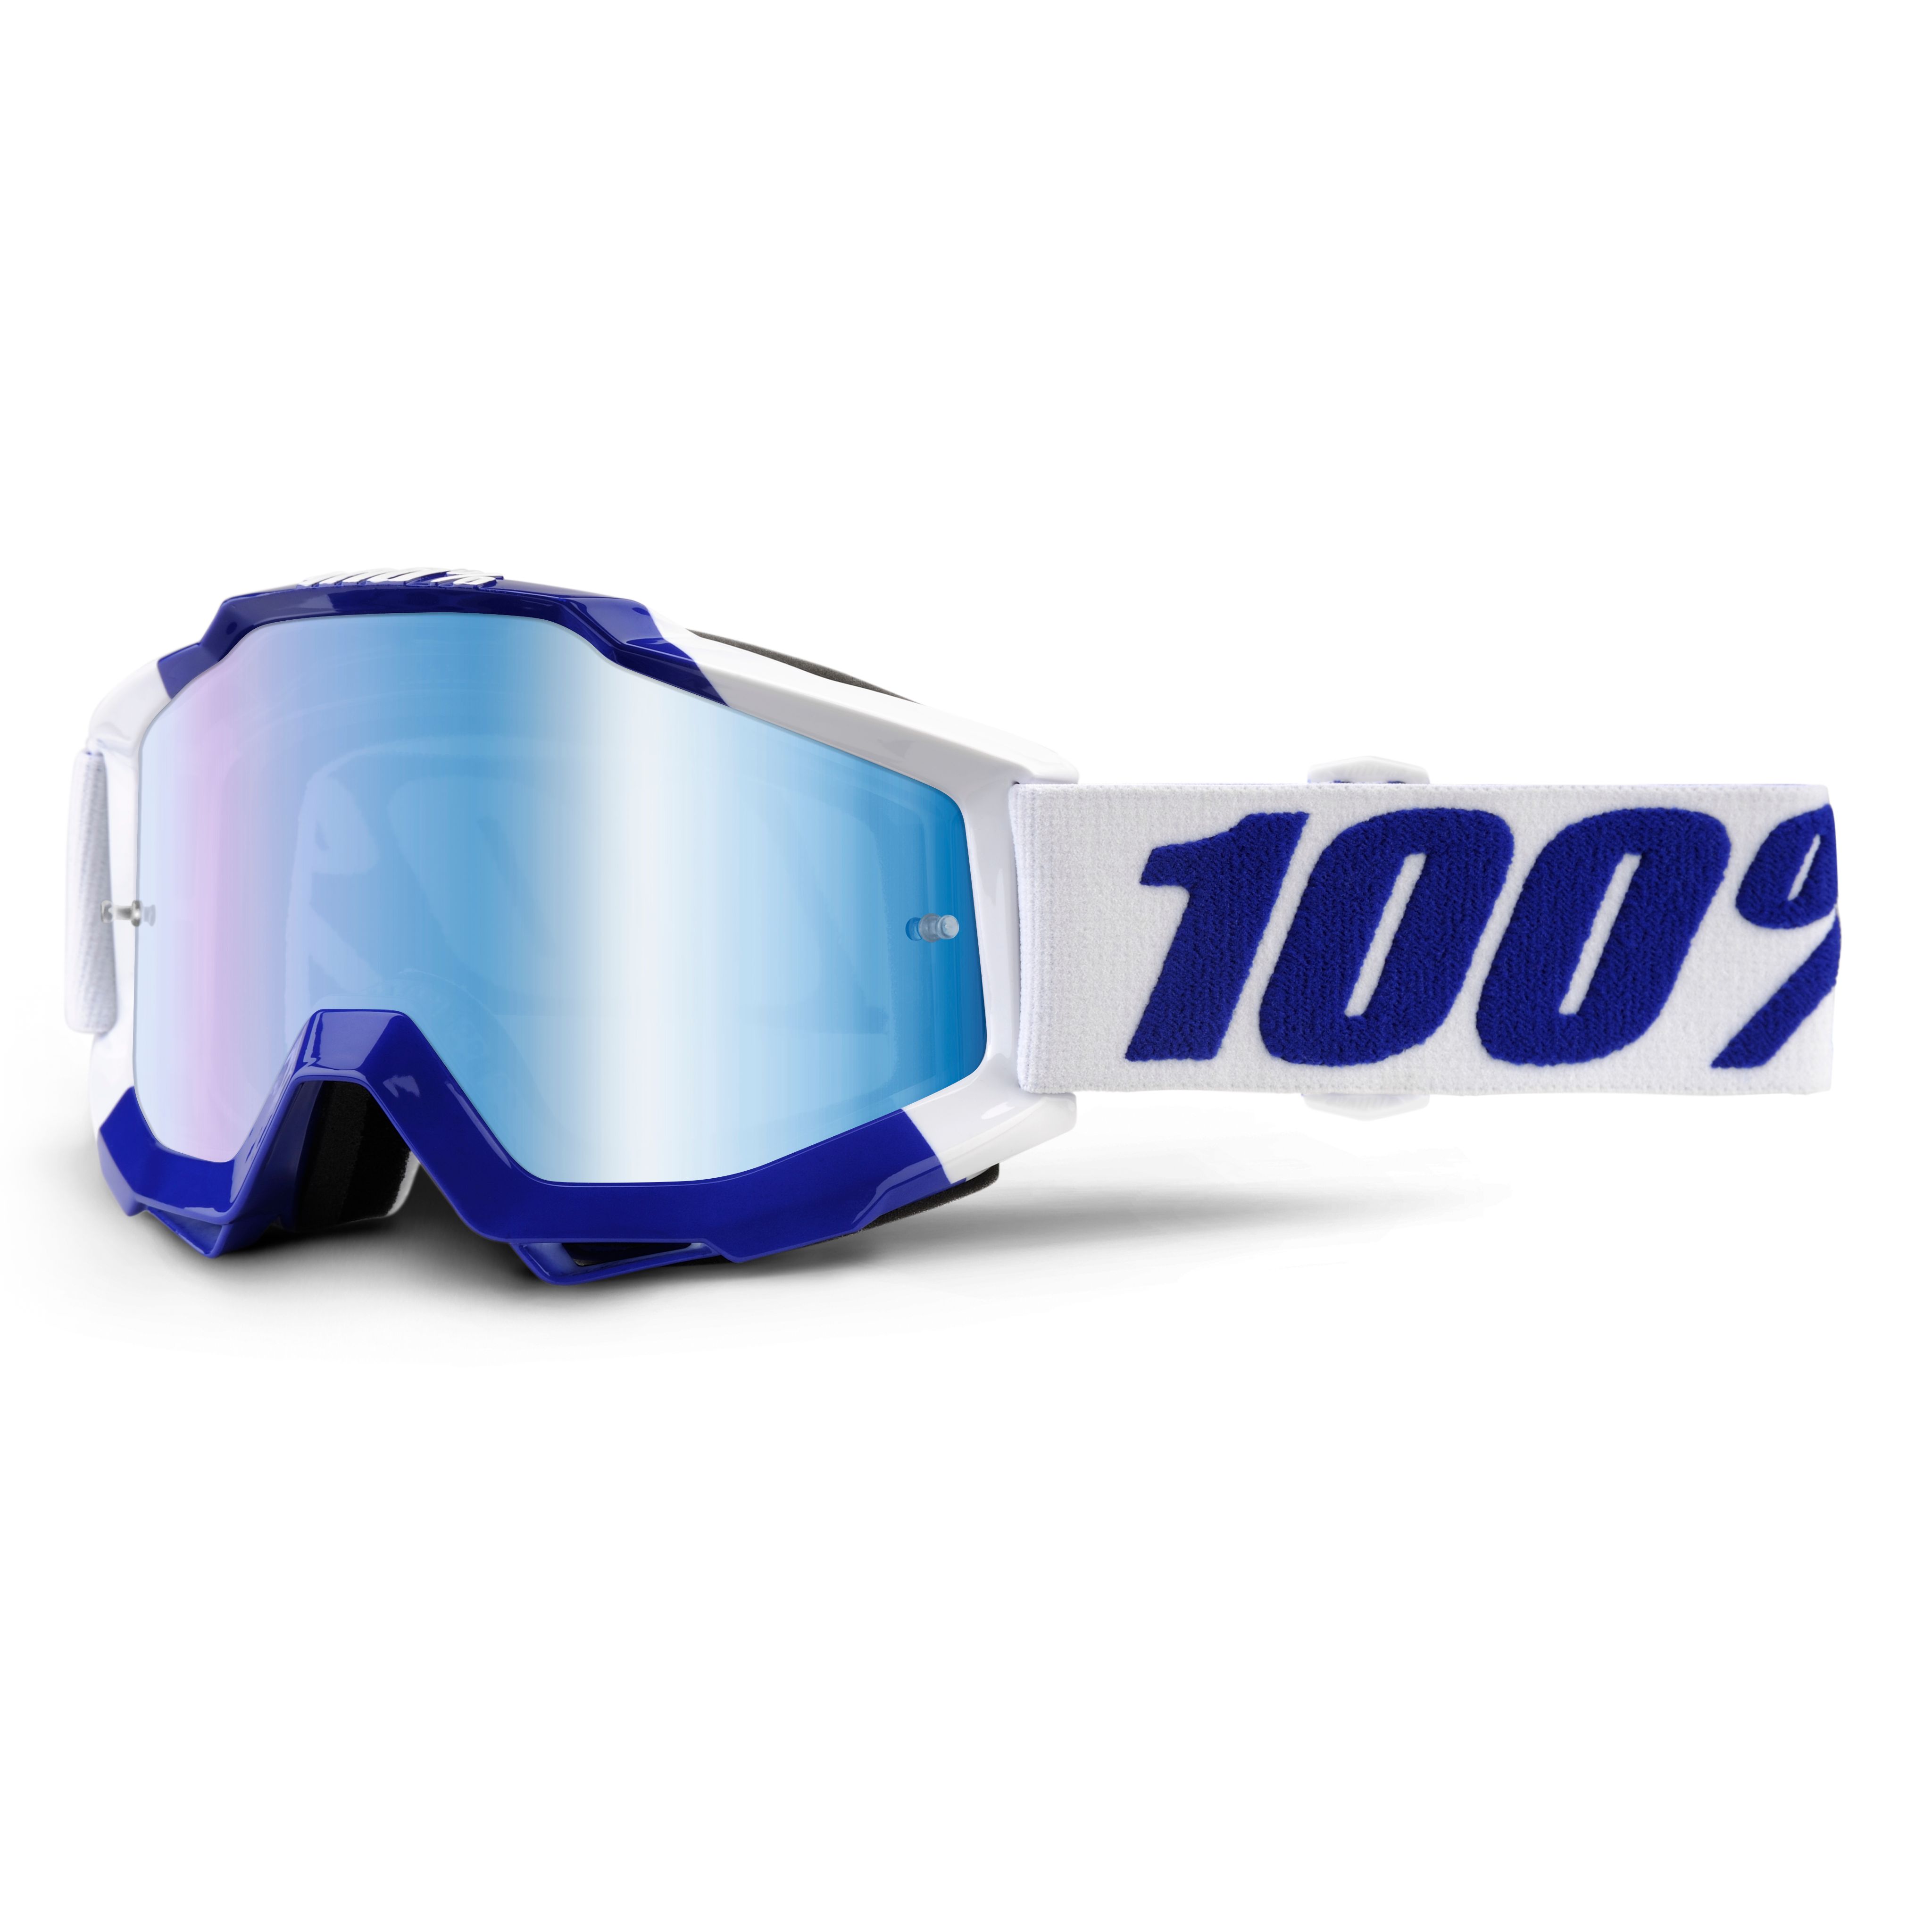 Masque Cross 100% Accuri - Calgary - Ecran Iridium Bleu